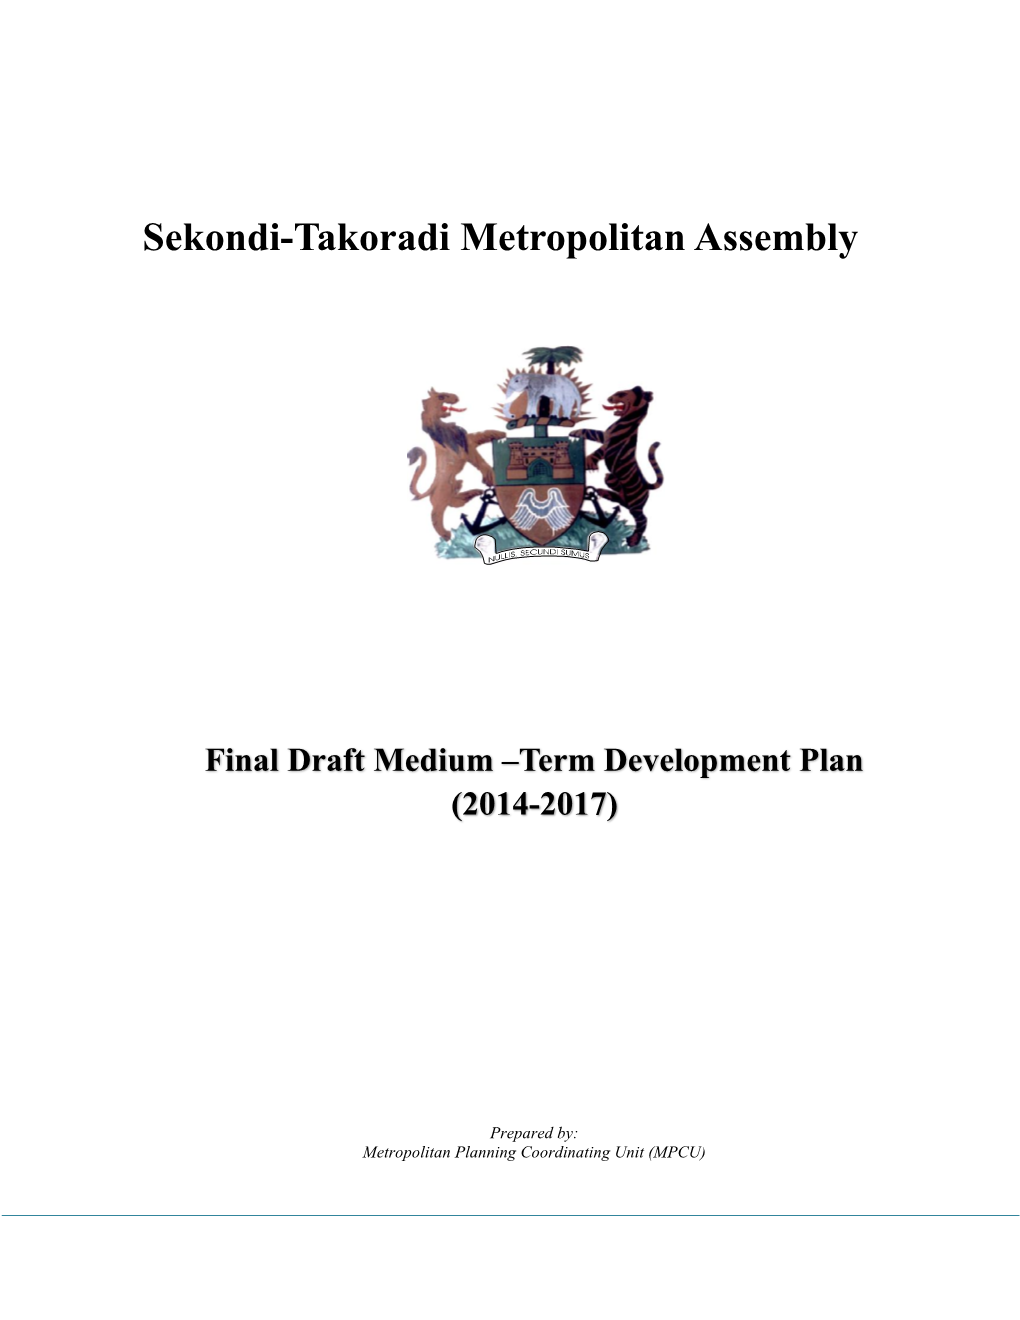 Sekondi-Takoradi Metropolitan Assembly Final Draft